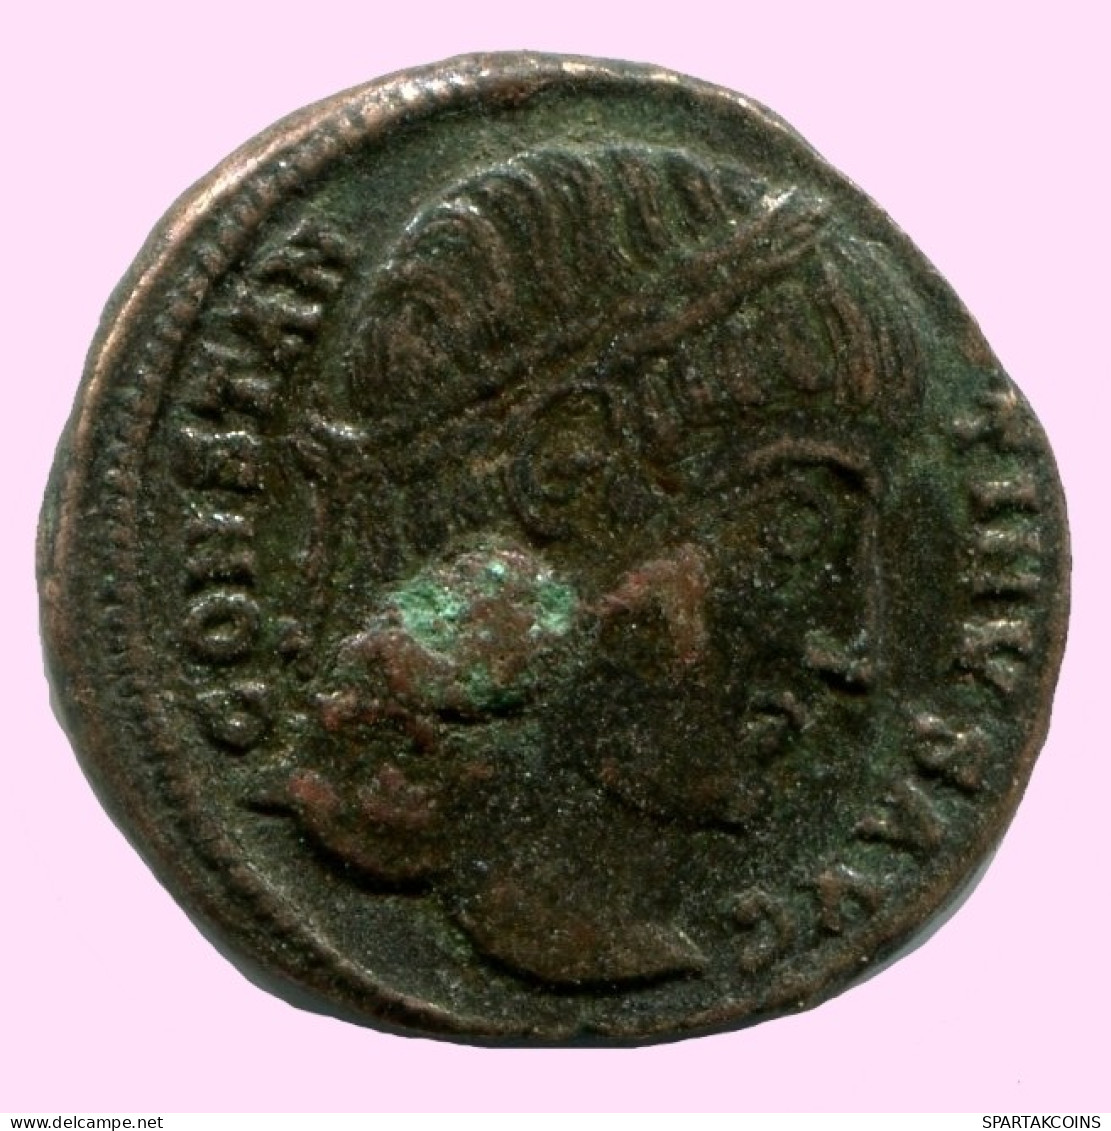 CONSTANTINE I Authentique Original ROMAIN ANTIQUEBronze Pièce #ANC12253.12.F.A - The Christian Empire (307 AD To 363 AD)